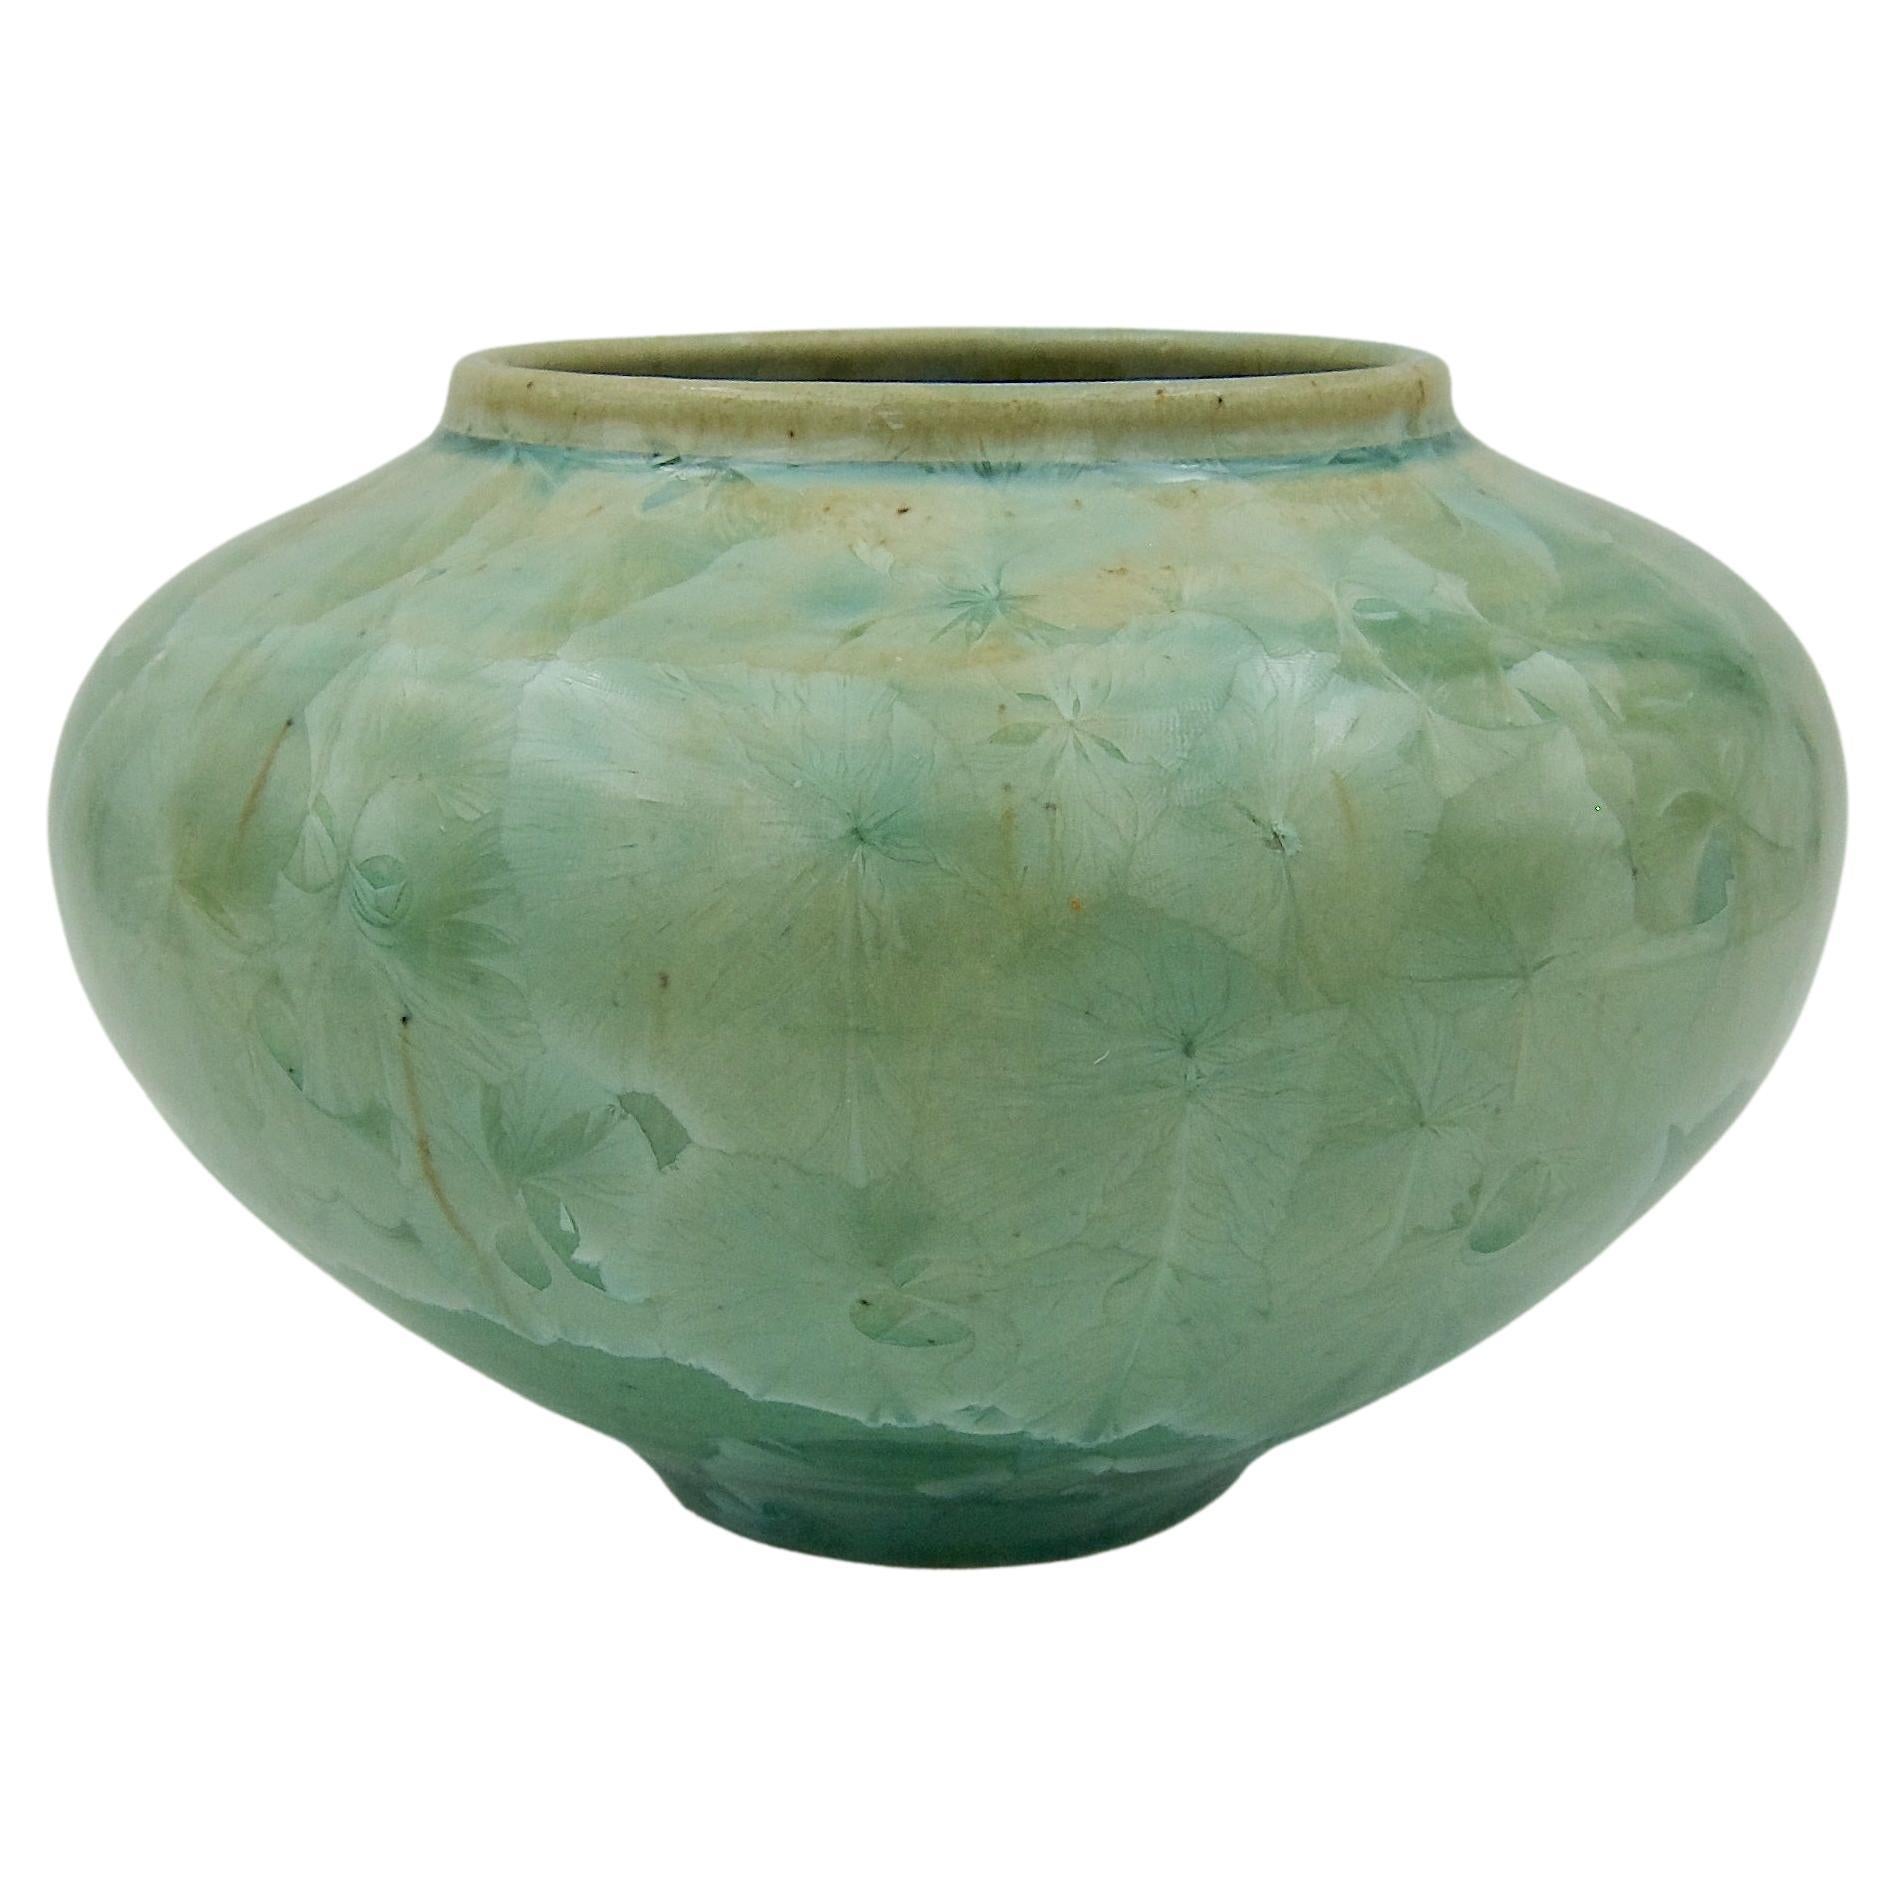 Vintage Buckingham Art Pottery Vase with Green Crystalline Glaze, 1994